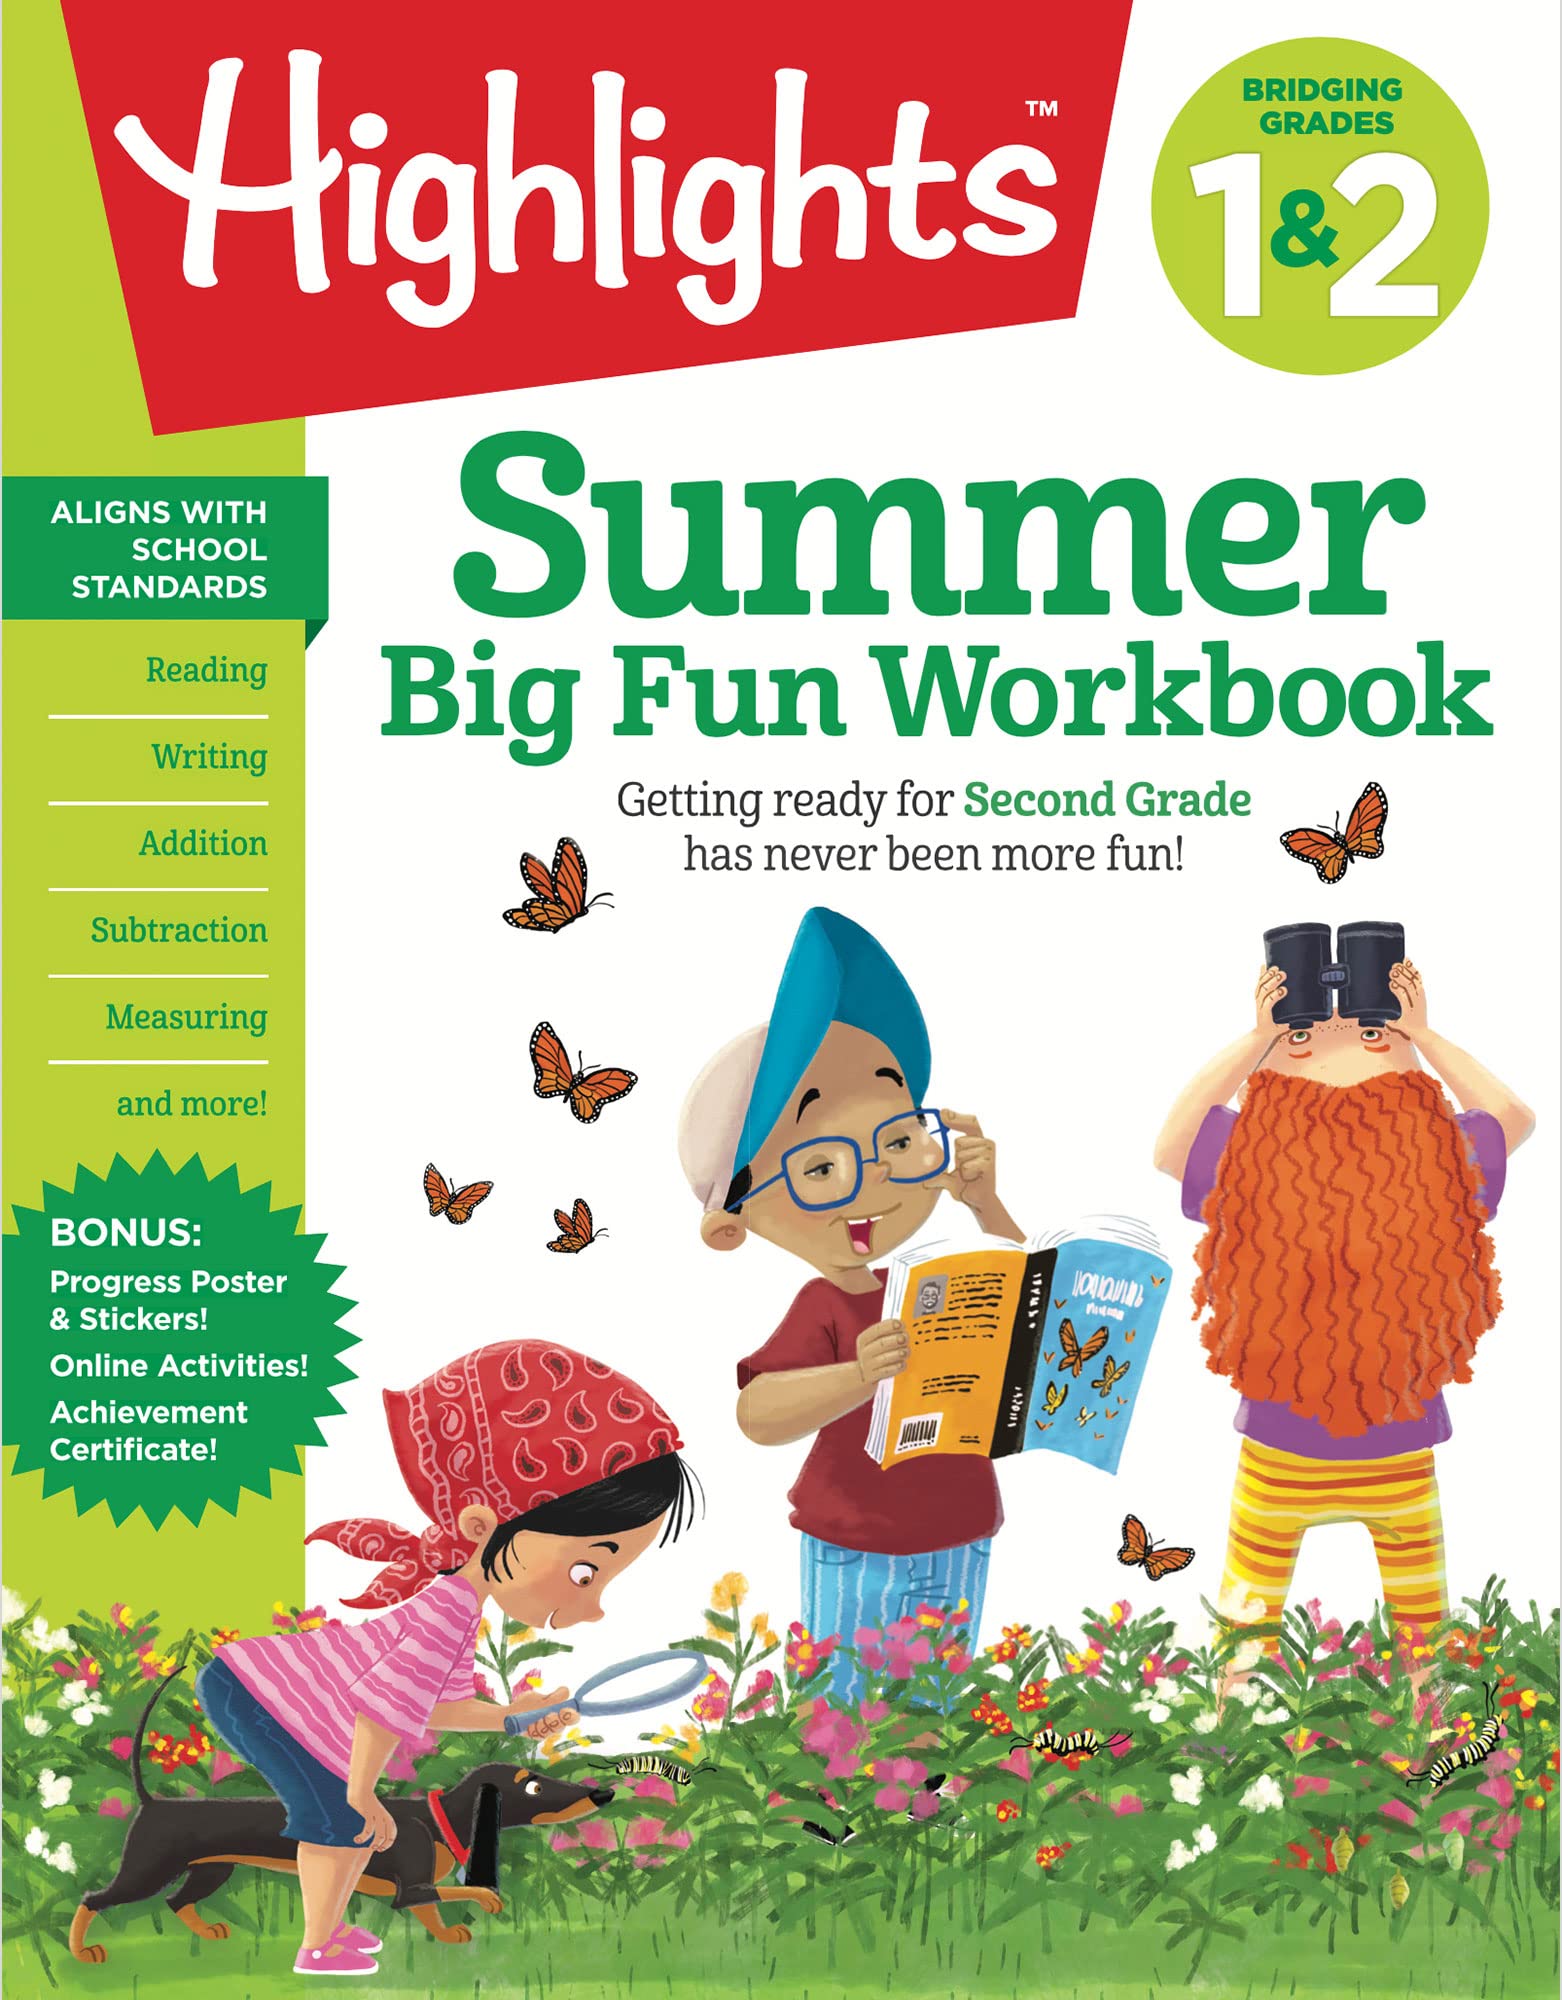 Summer Big Fun Workbook Bridging Grades 1 & 2 by Highlights Learning